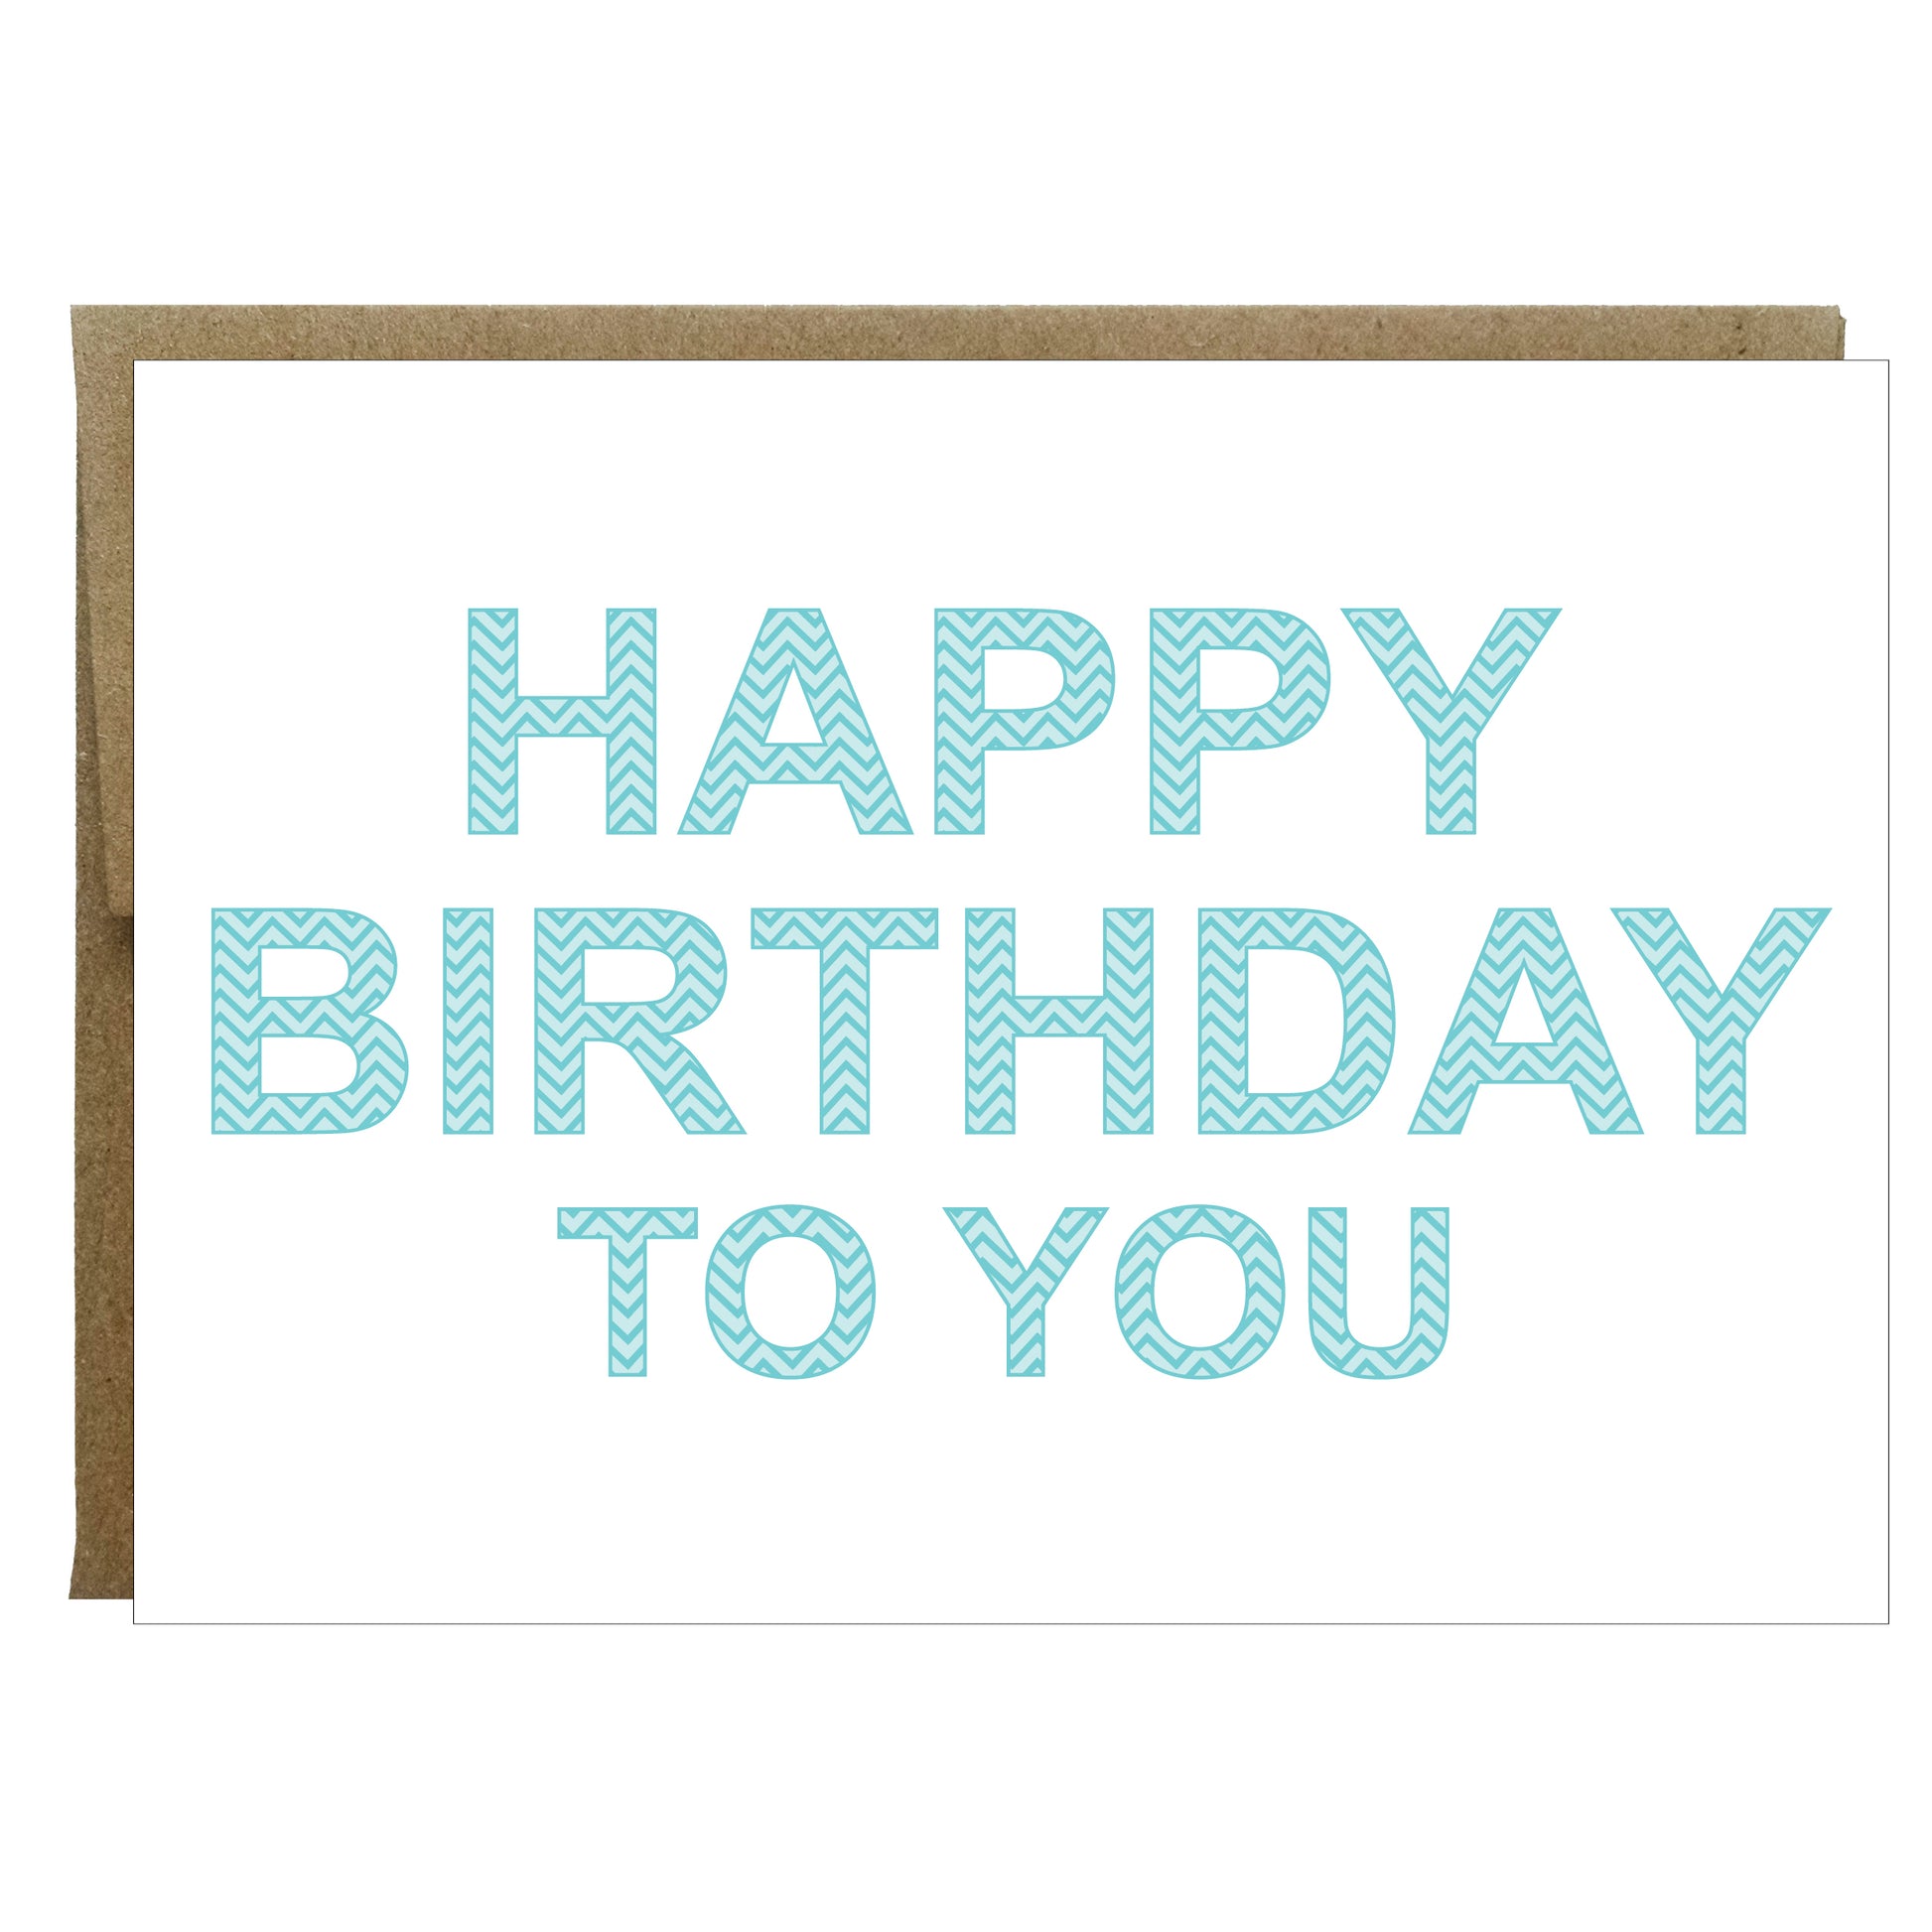 Happy Birthday To You Chevron Patterned Greeting Card - Idea Chíc